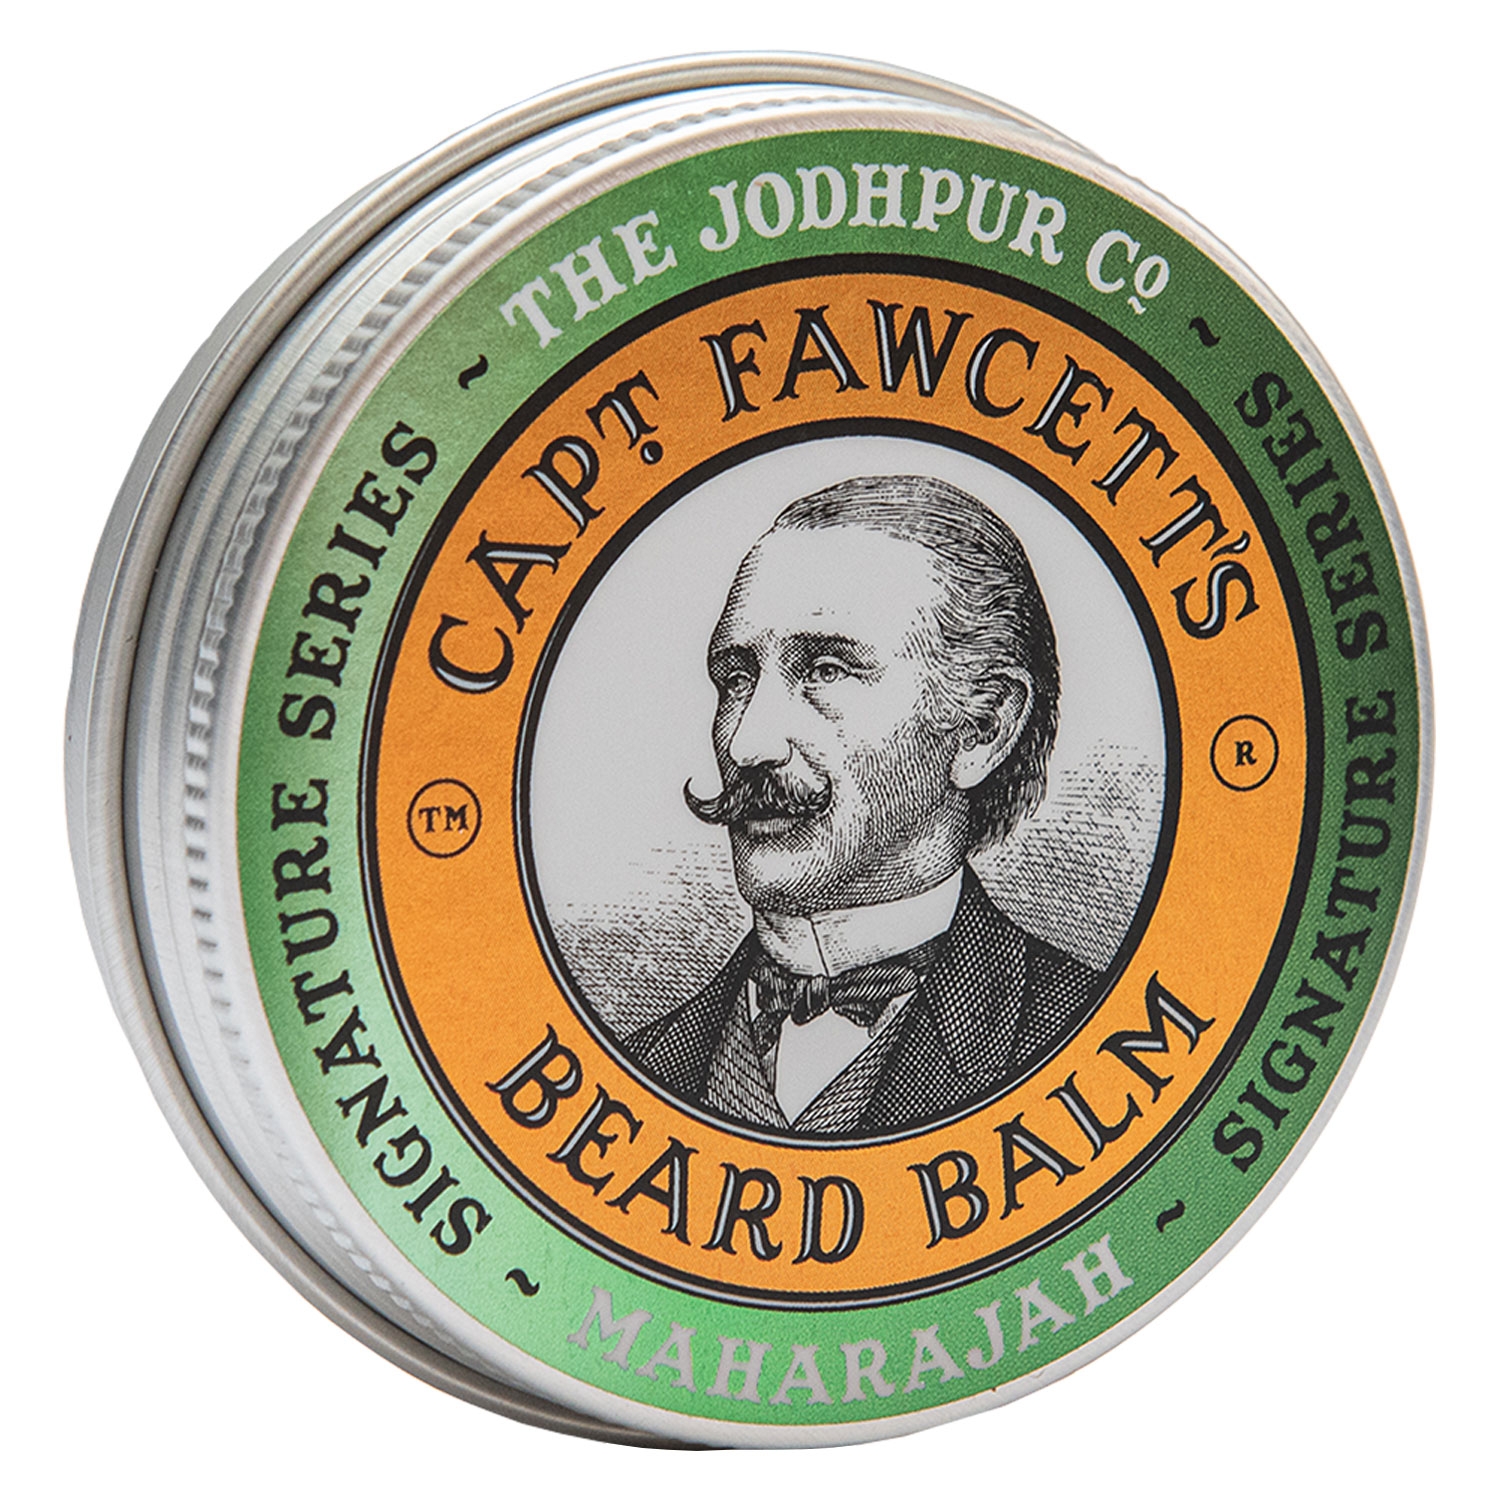 Image du produit de Capt. Fawcett Care - Maharajah Beard Balm